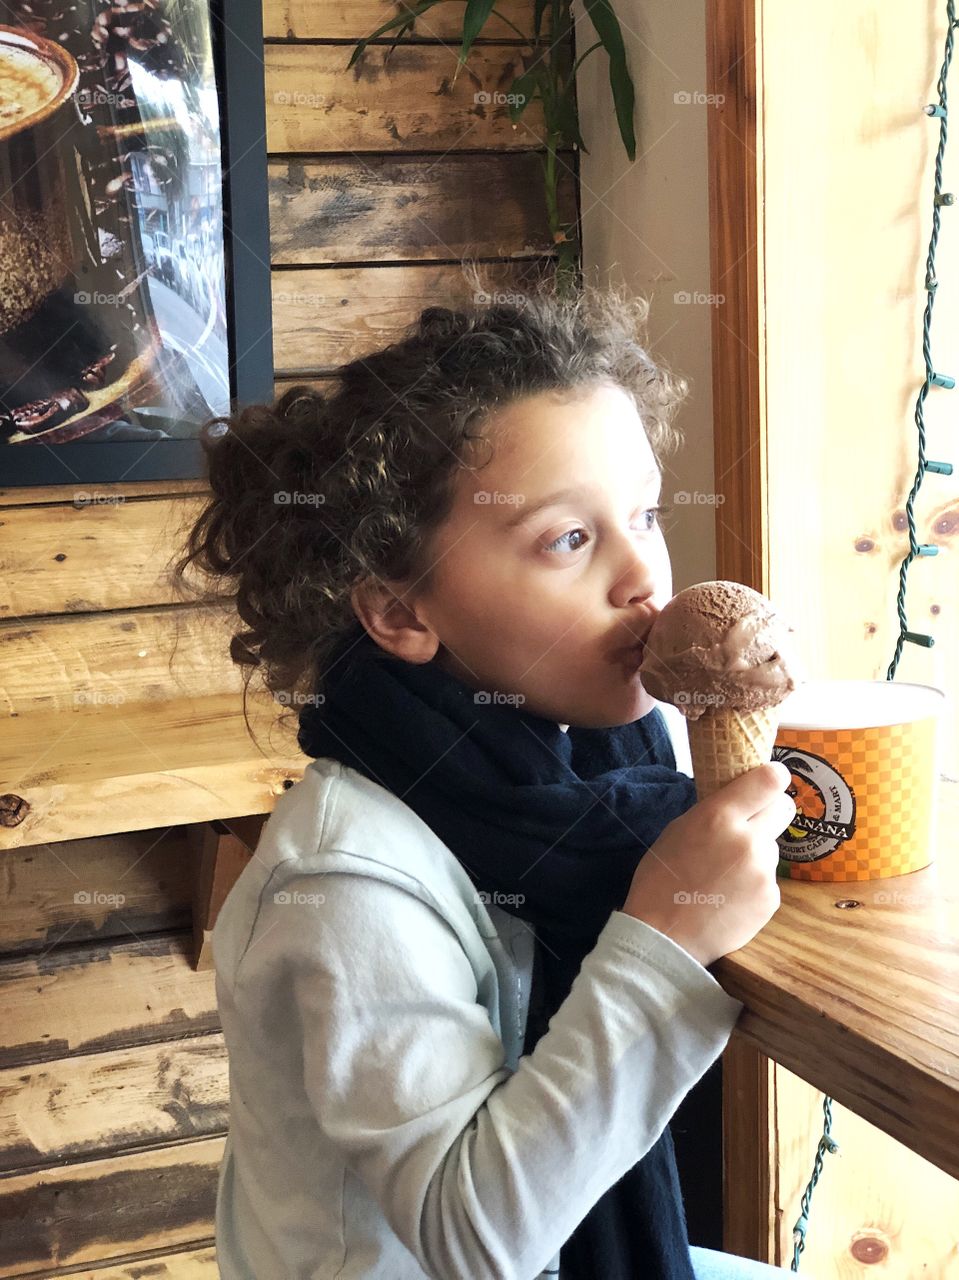 Child eating ice cream cone in window seat 